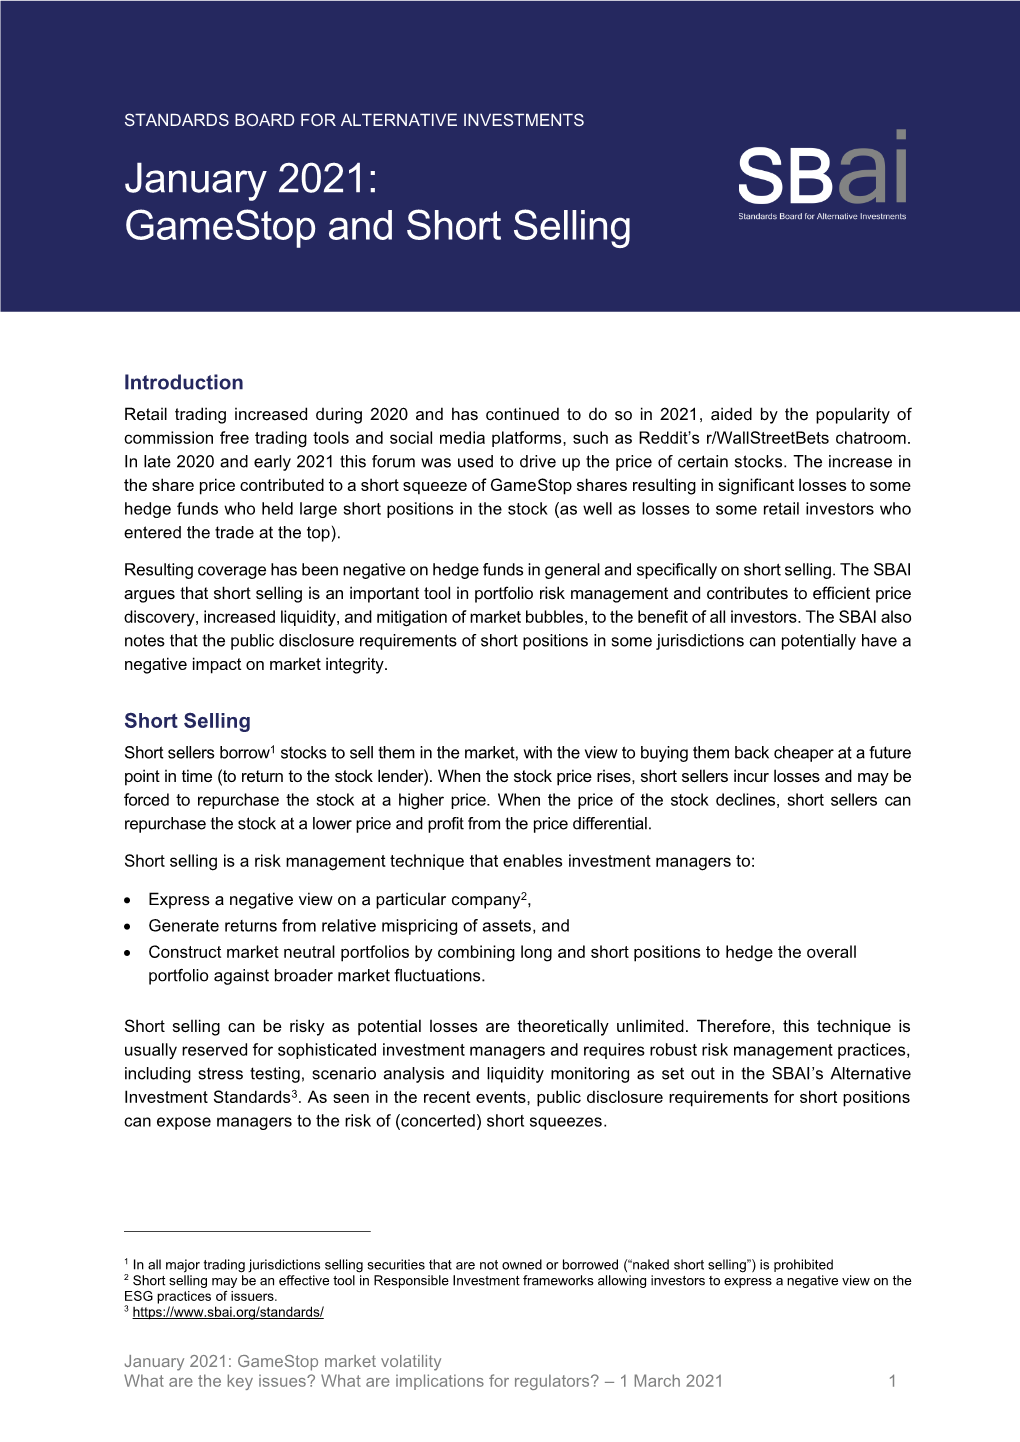 Gamestop and Short Selling